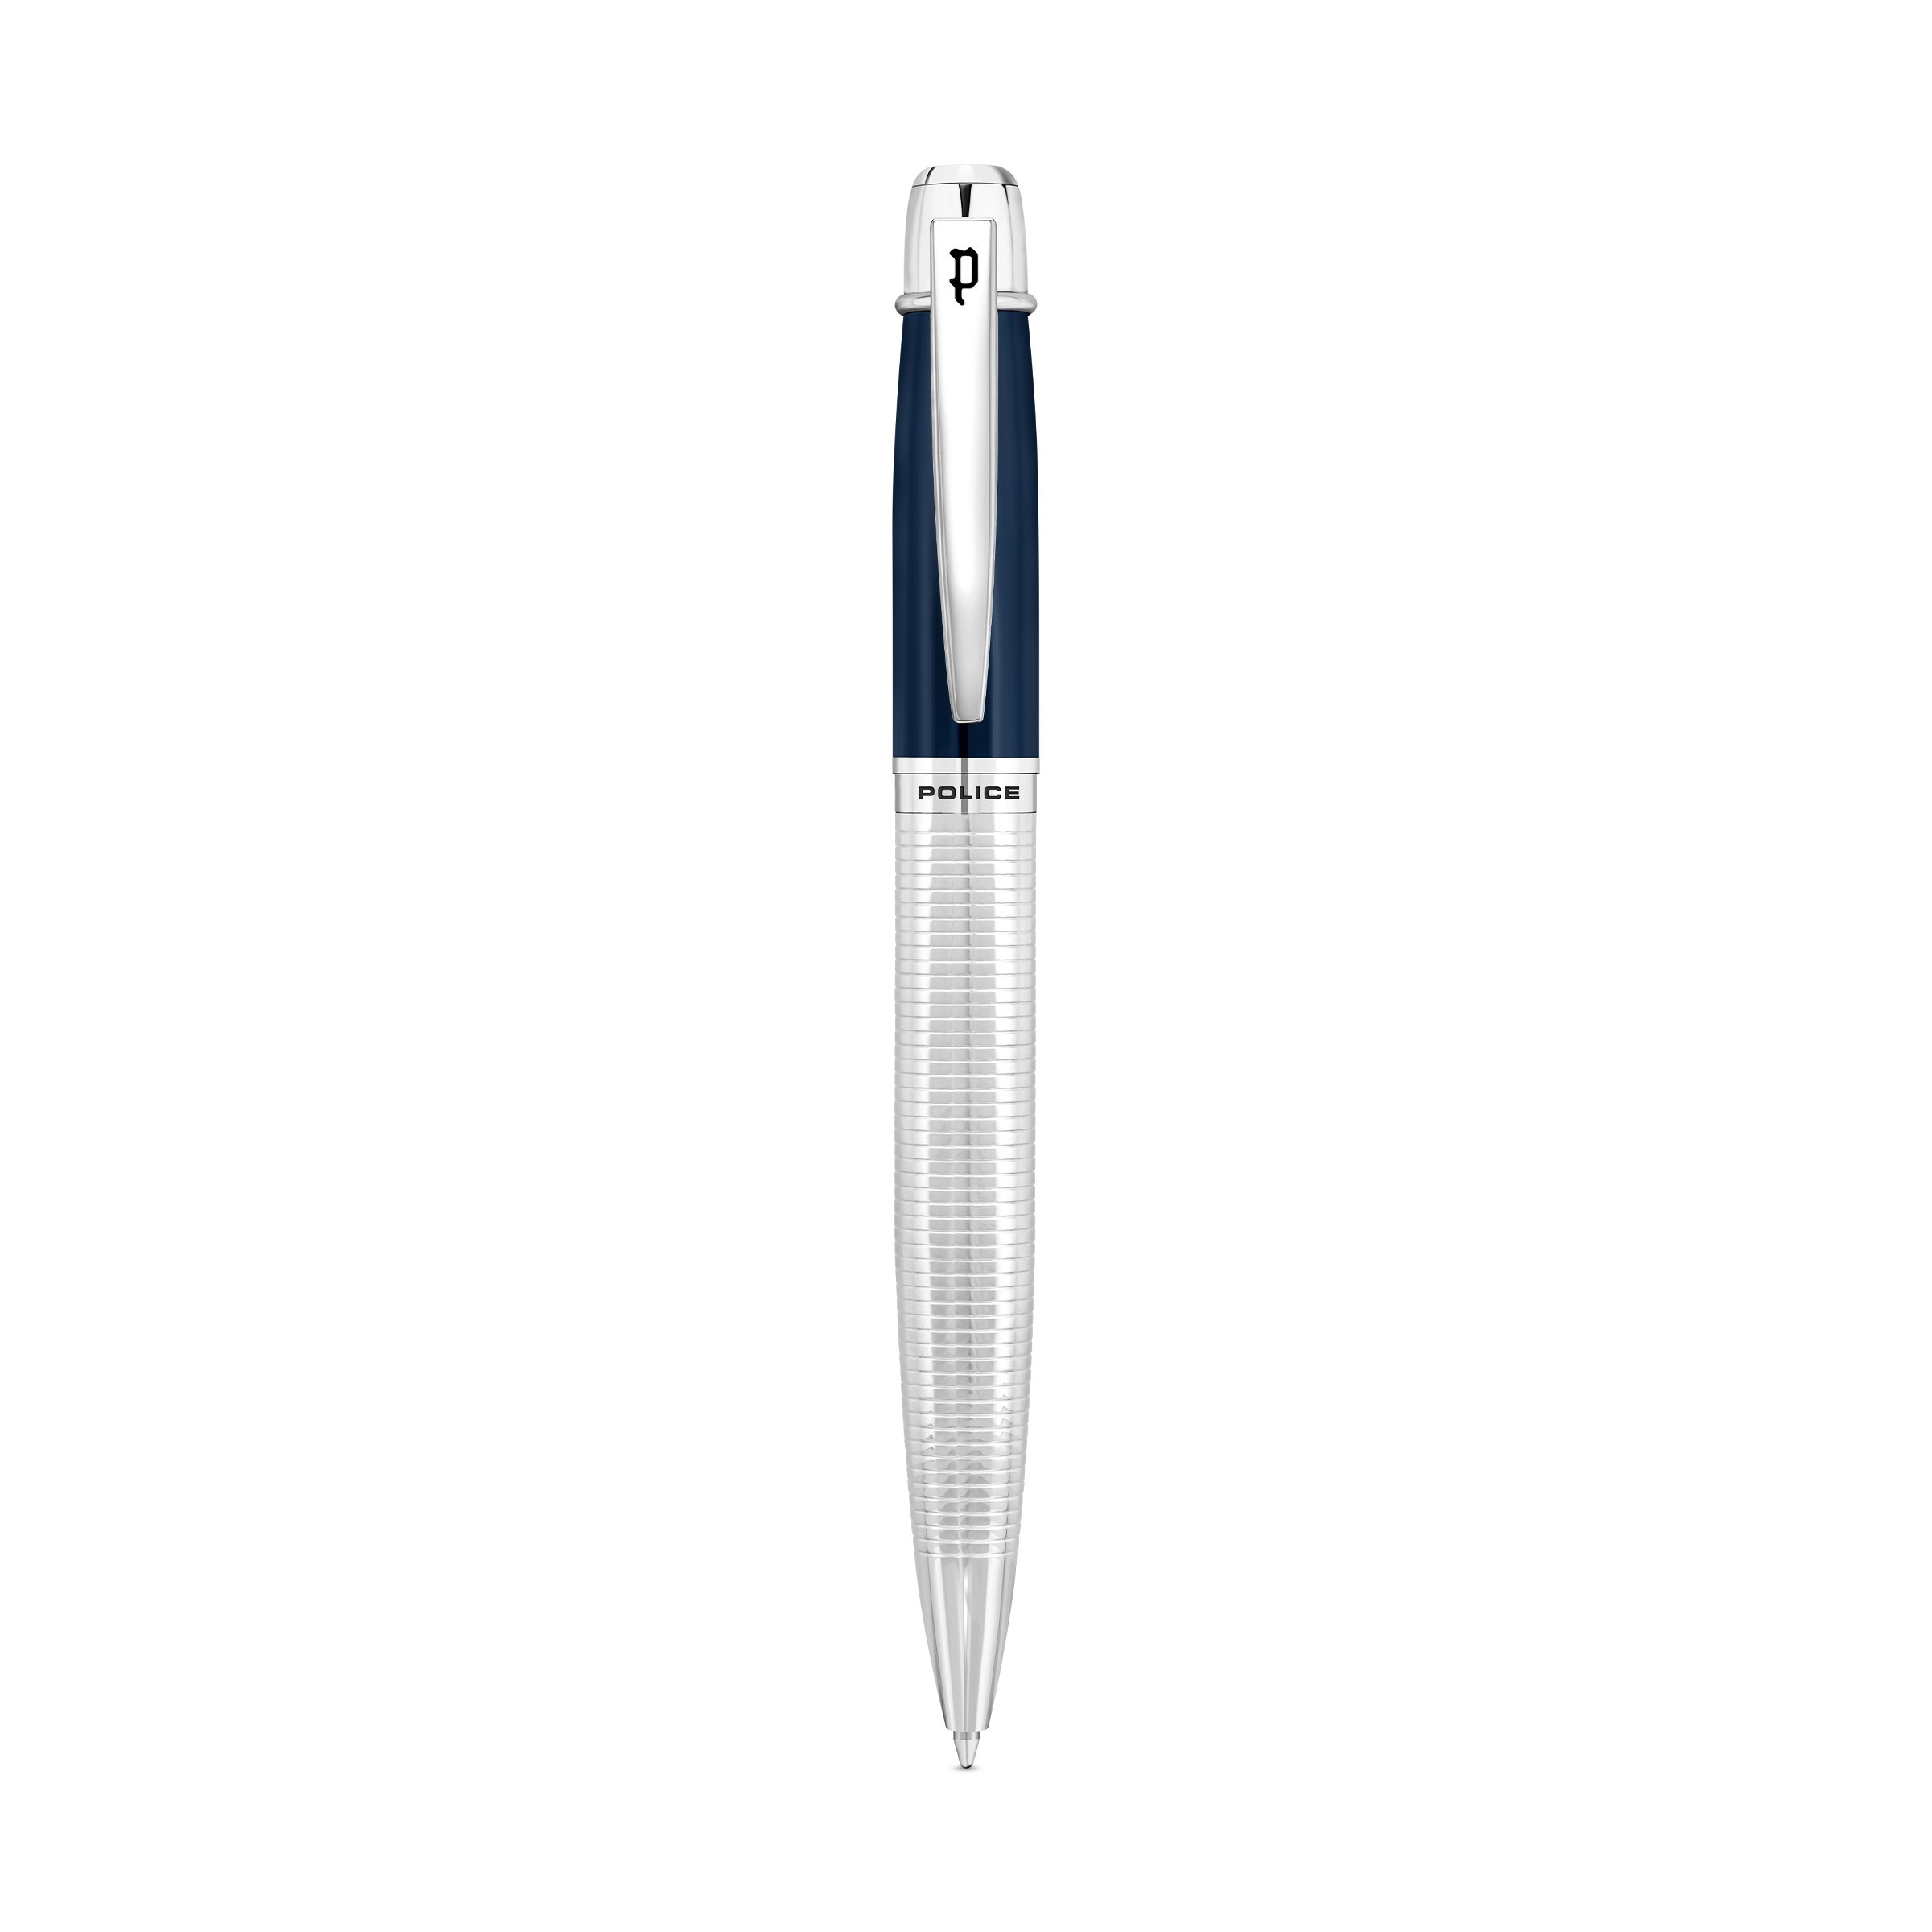 POLICE - Takota Pen For Men Blue & Silver Color - PERGR0001402